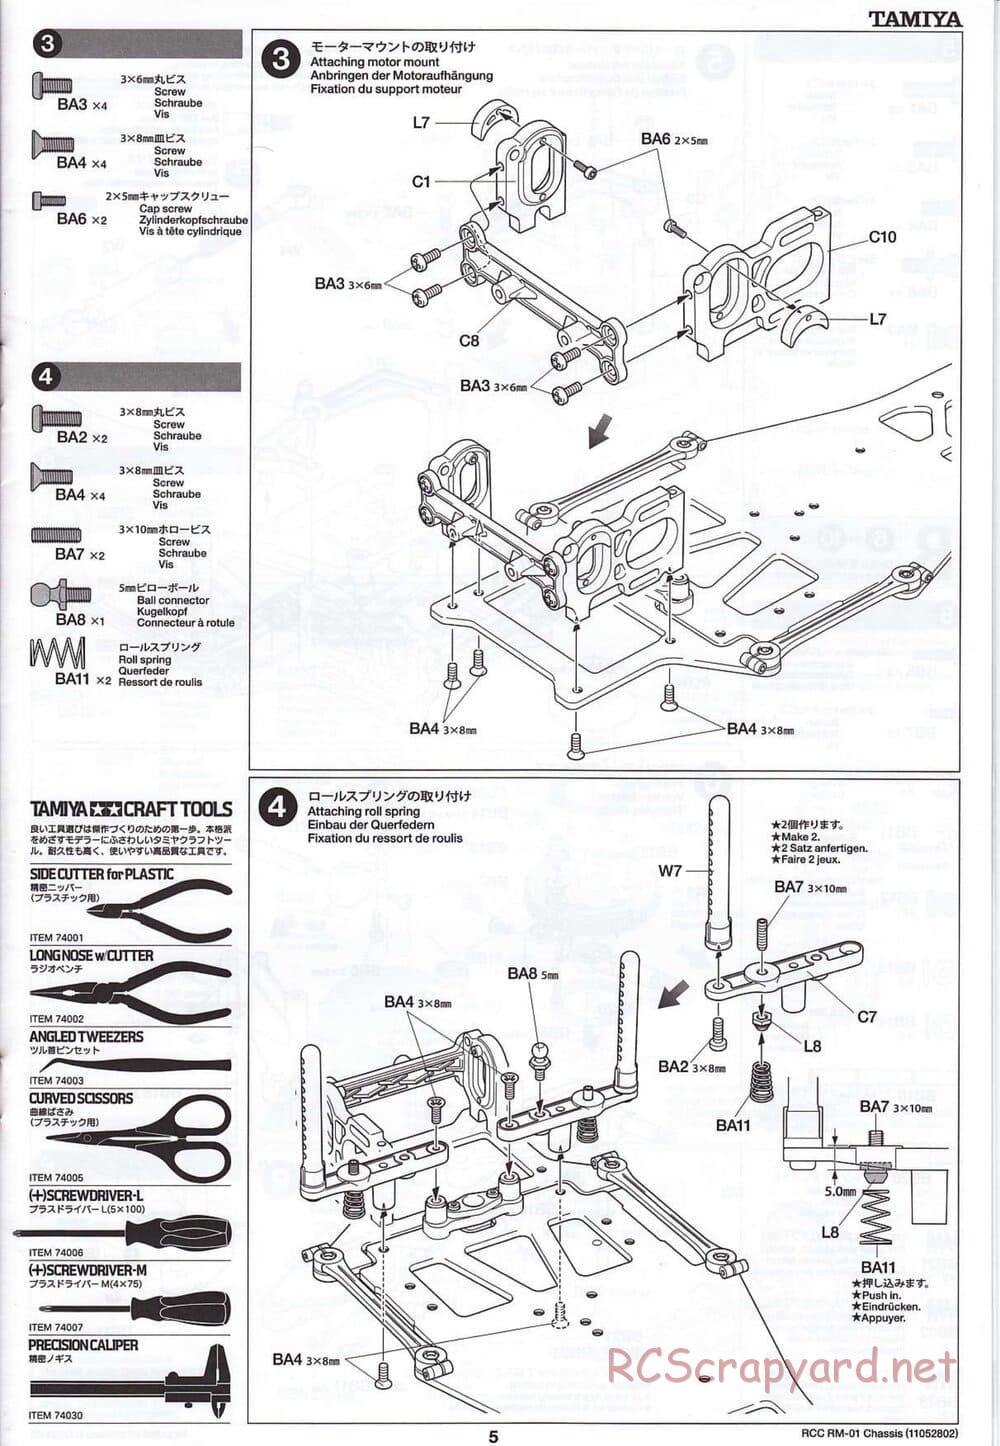 Tamiya - RM-01 Chassis - Manual - Page 5